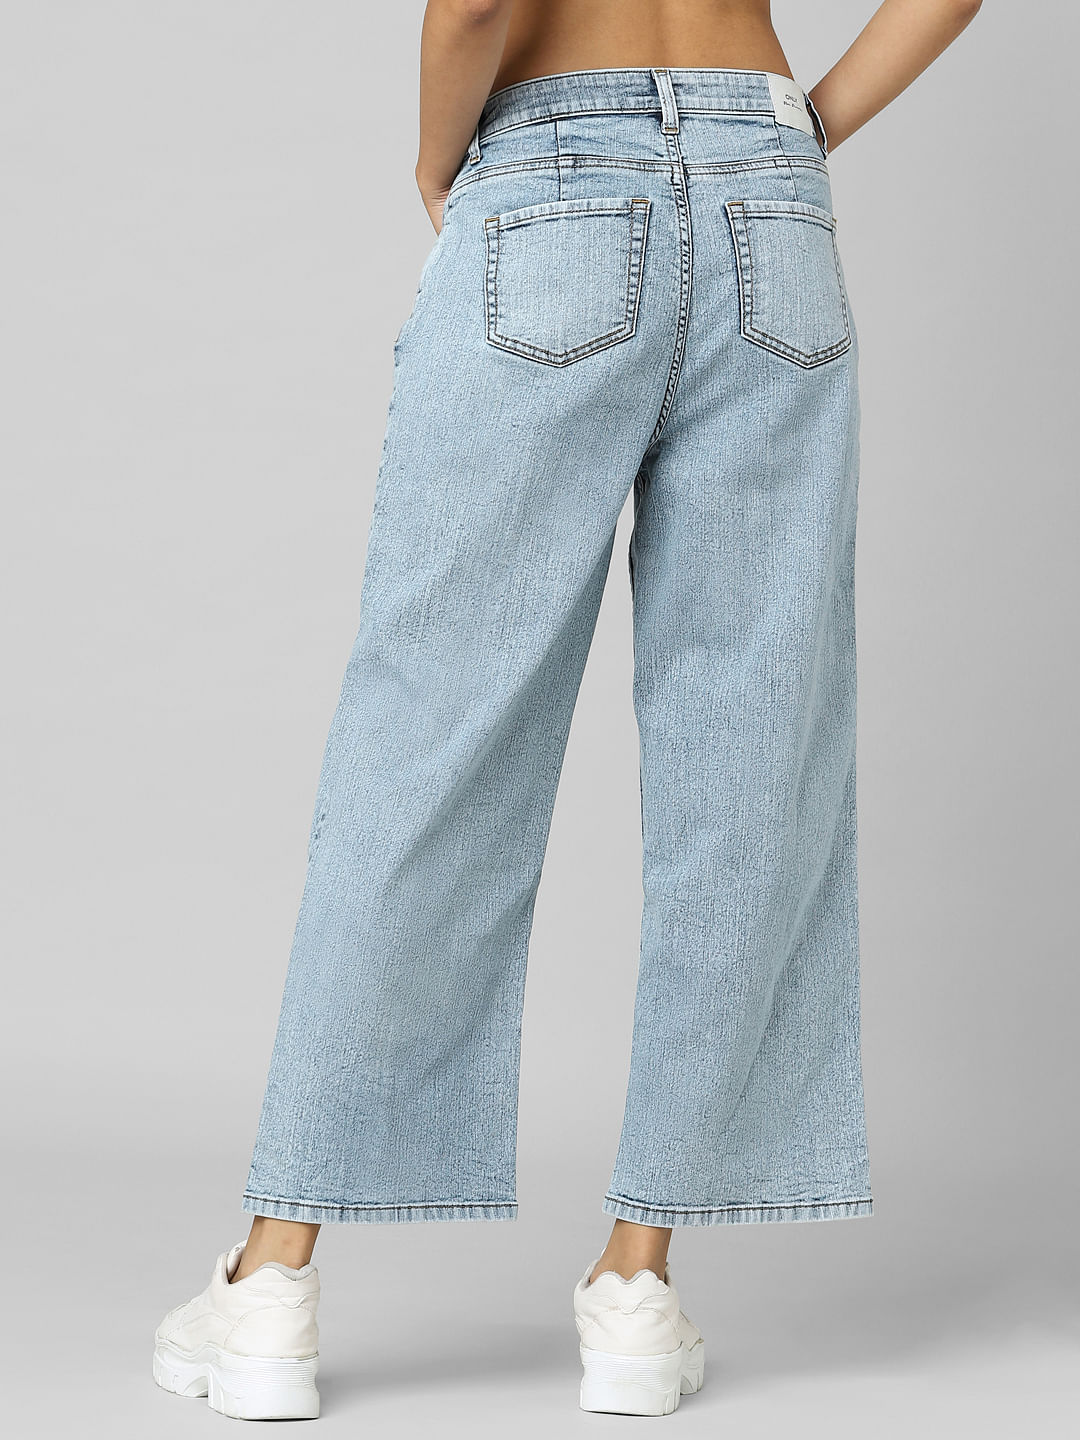 Amazon.com: ABALACOCO Big Boys' Kids Jeans Cotton Pull-On Soft Denim Pants  Stretch Waist 4-11T (9-10 Years, Blue): Clothing, Shoes & Jewelry